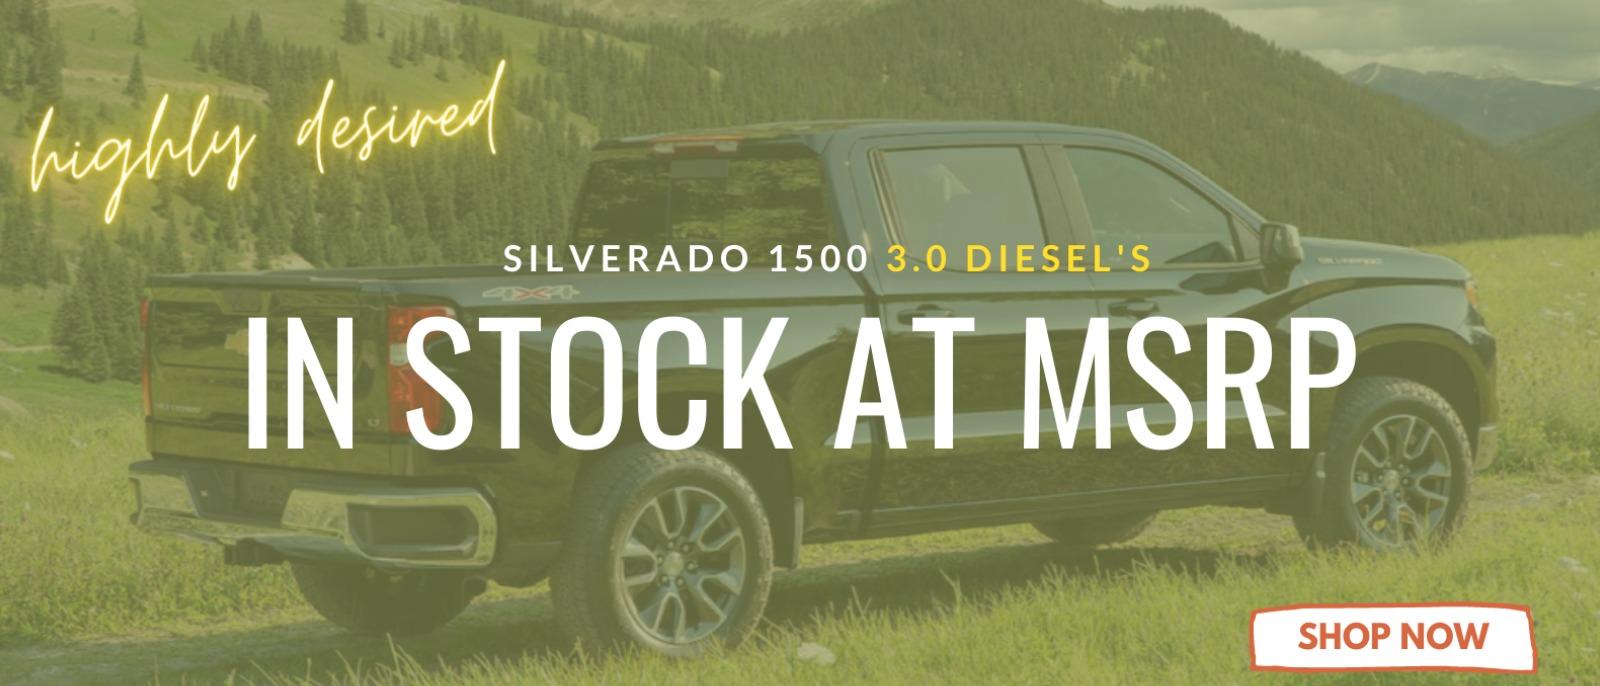 Silverado 1500 3.0 Diesels In Stock